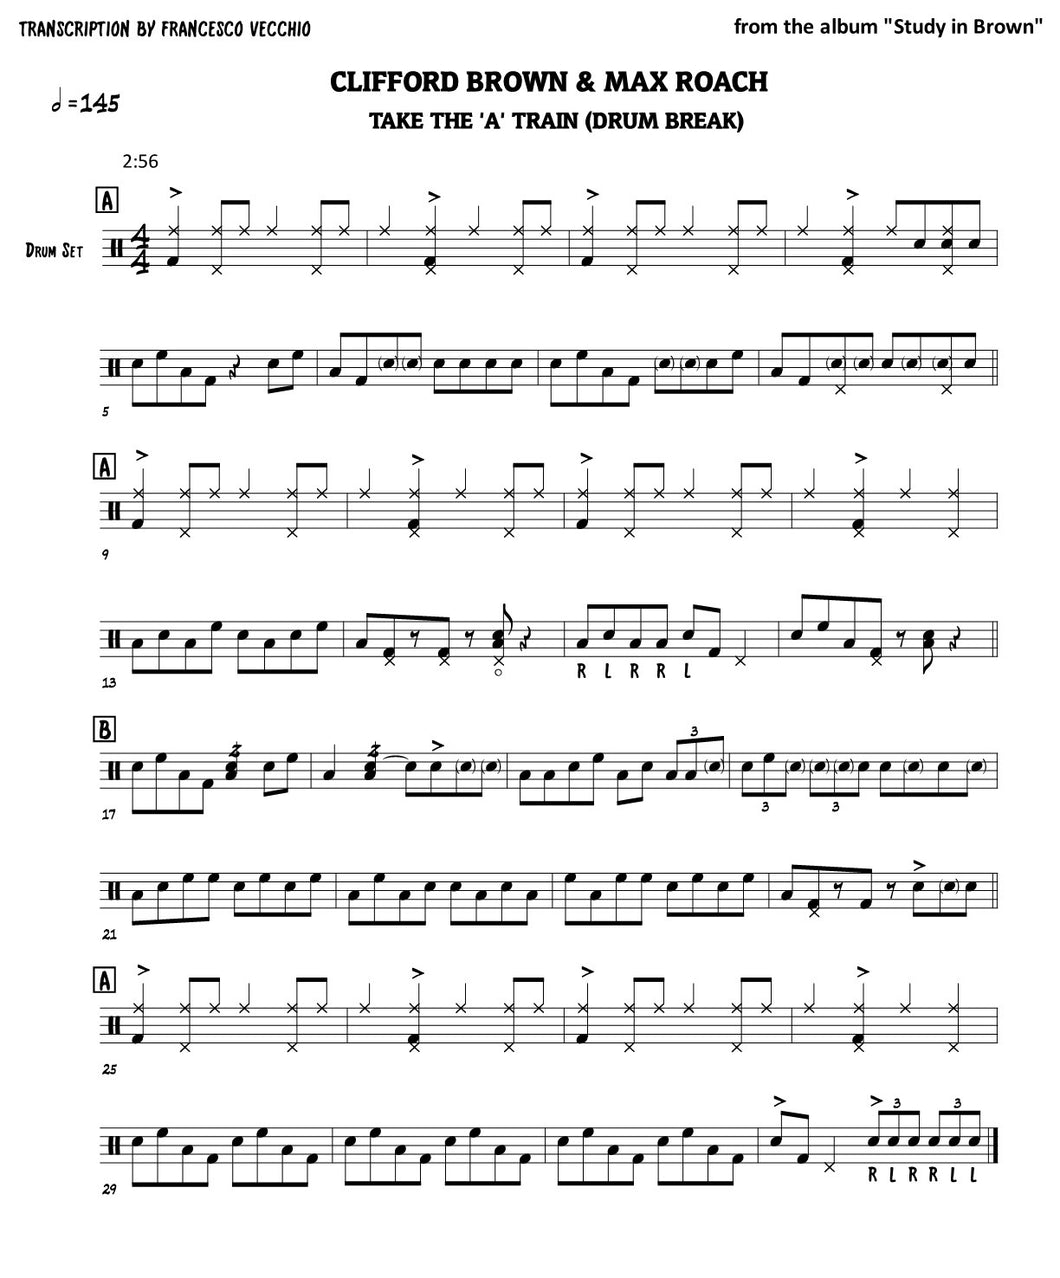 Take the 'A' Train - Clifford Brown & Max Roach - Selection Drum Transcription / Drum Sheet Music - FrancisDrummingBlog.com